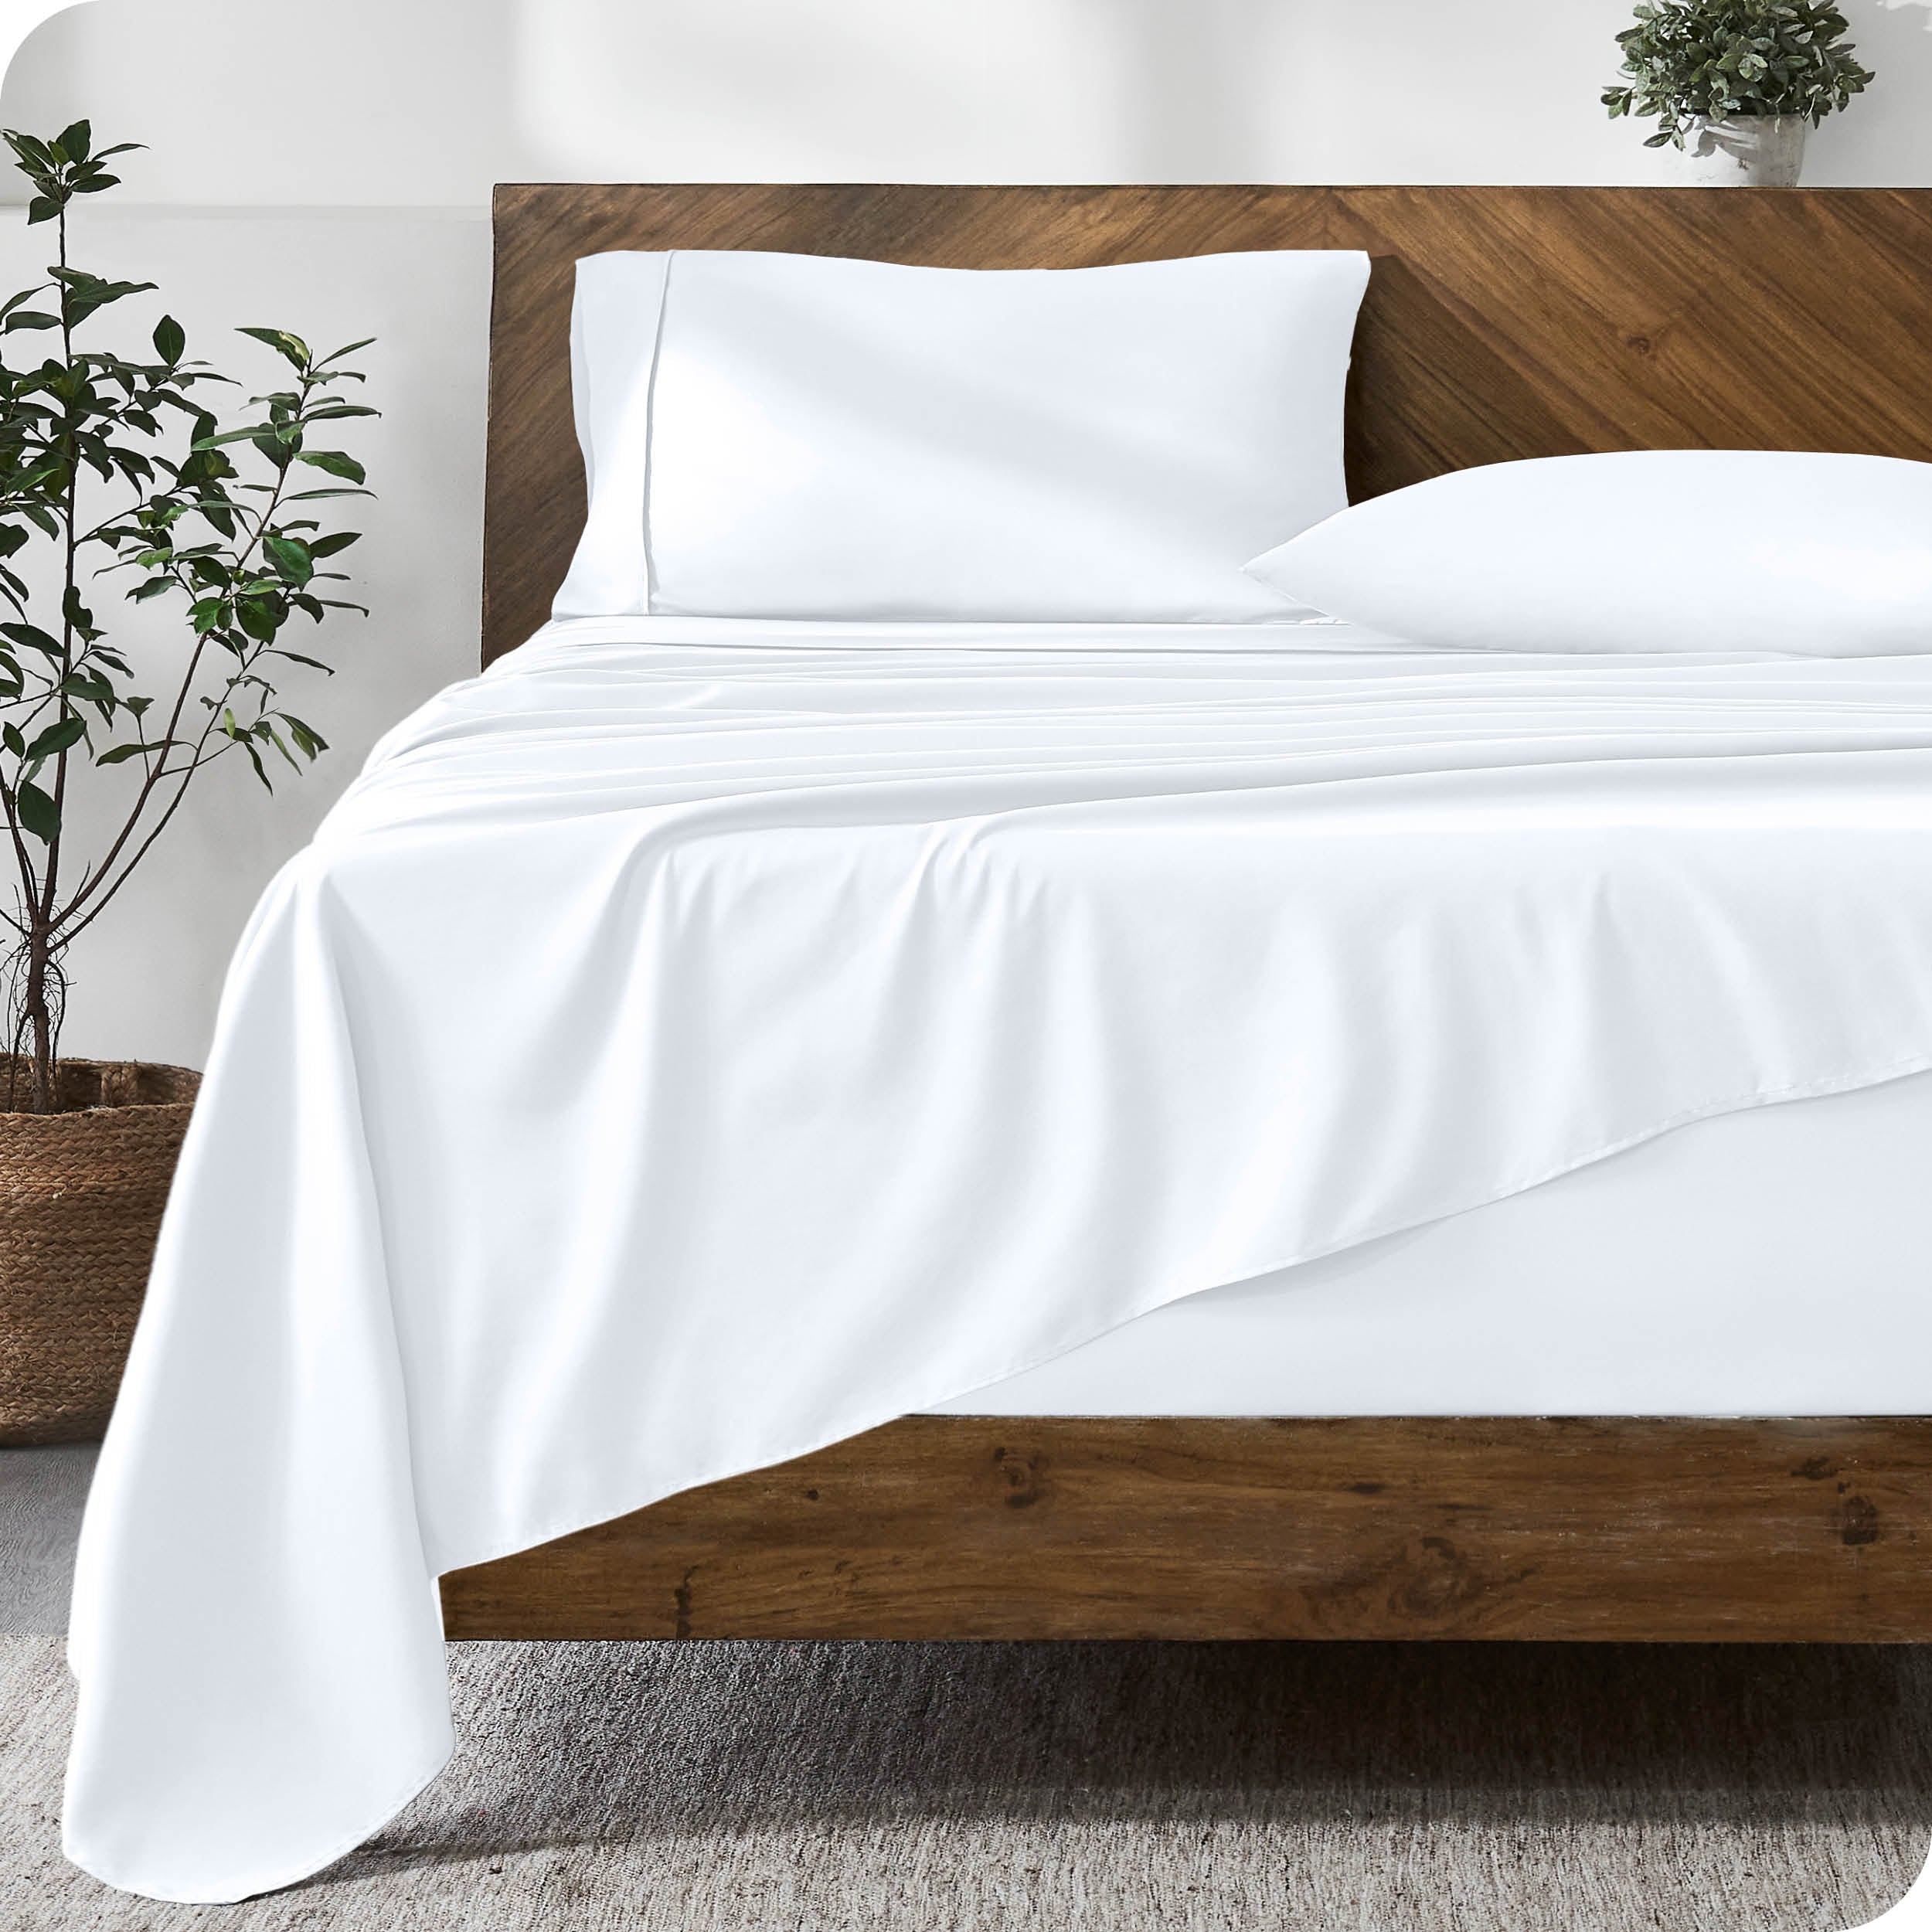 A modern bed with a microfiber sheet set on the mattress.